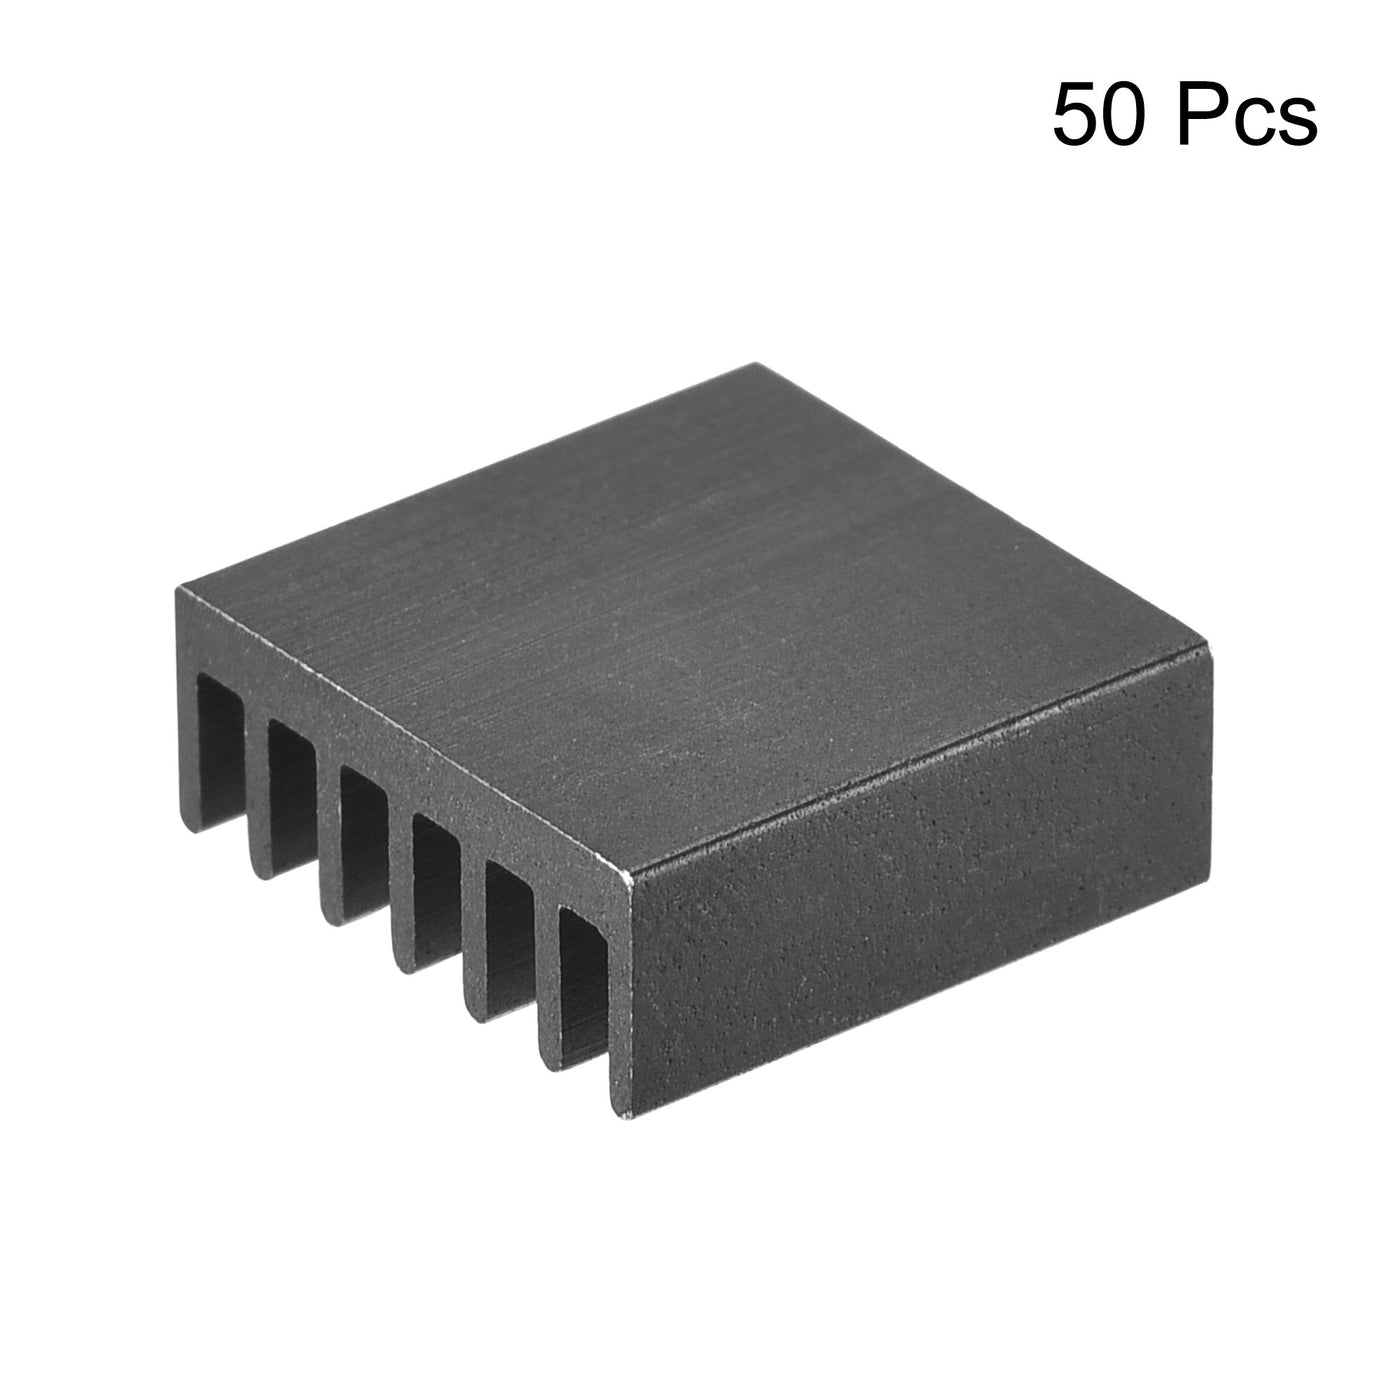 uxcell Uxcell 14x14x6mm Aluminum Heatsink Electronics Cooler for MOS IC Chip Black 50 Pcs